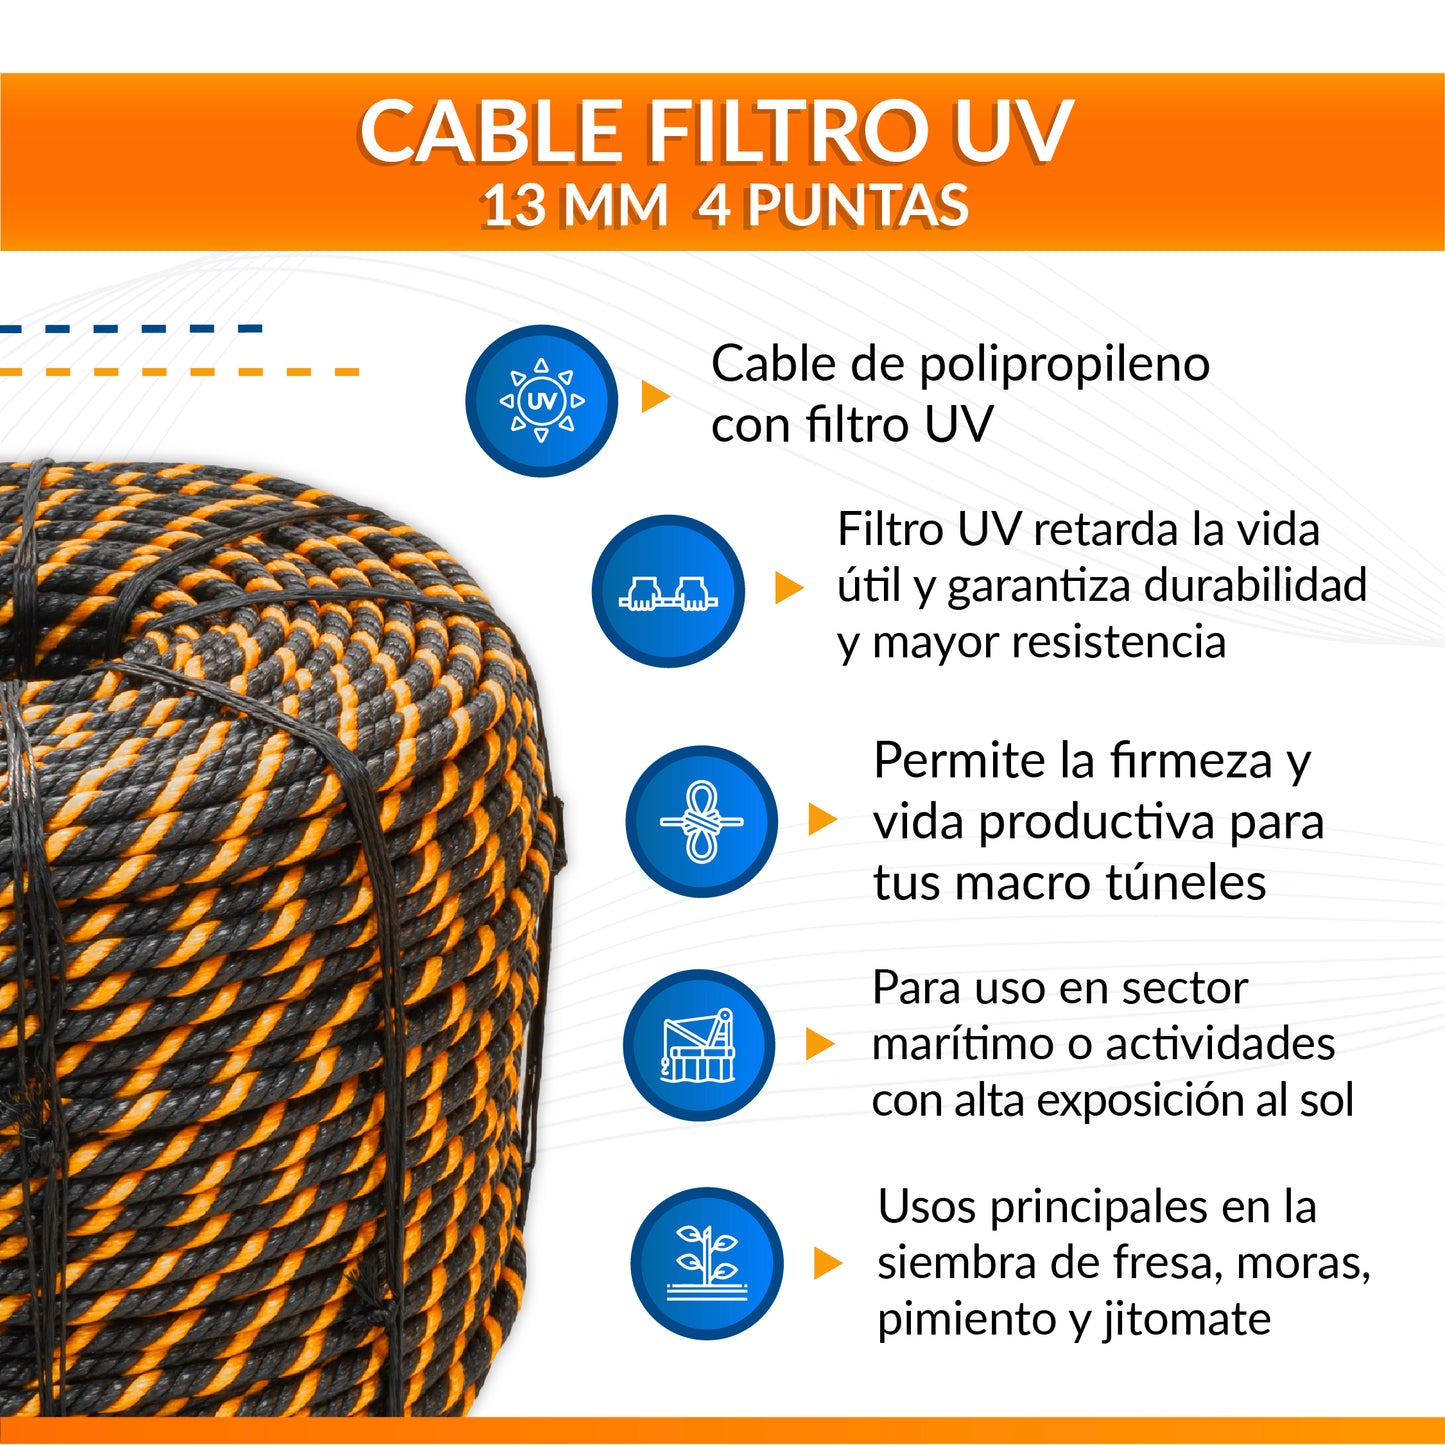 Cable de Polipropileno UV 11 mm 4 puntas Negro/Naranja